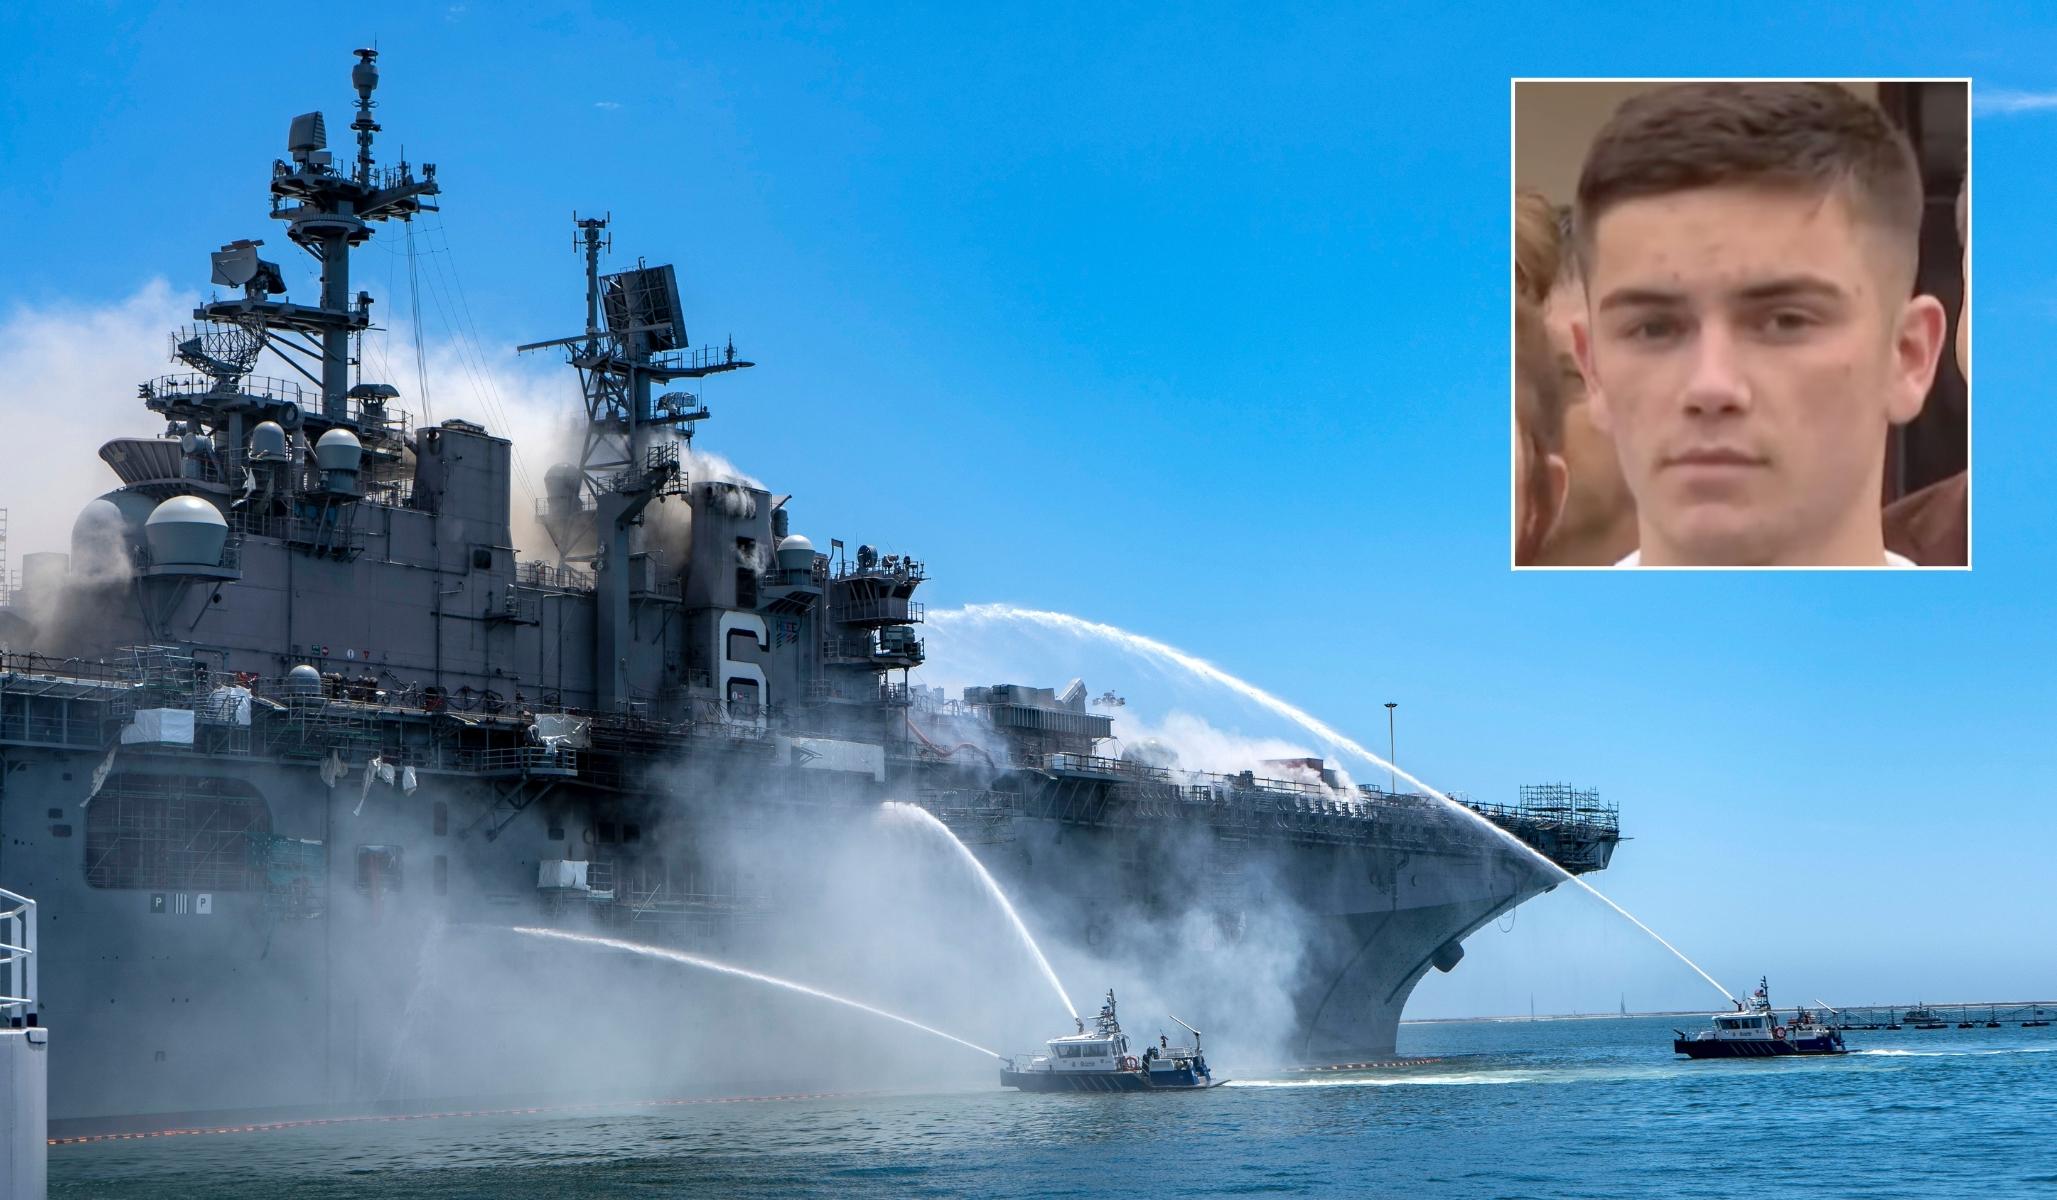 Navy Prosecutors Tried to Scapegoat Junior Sailor for Billion-Dollar Fire